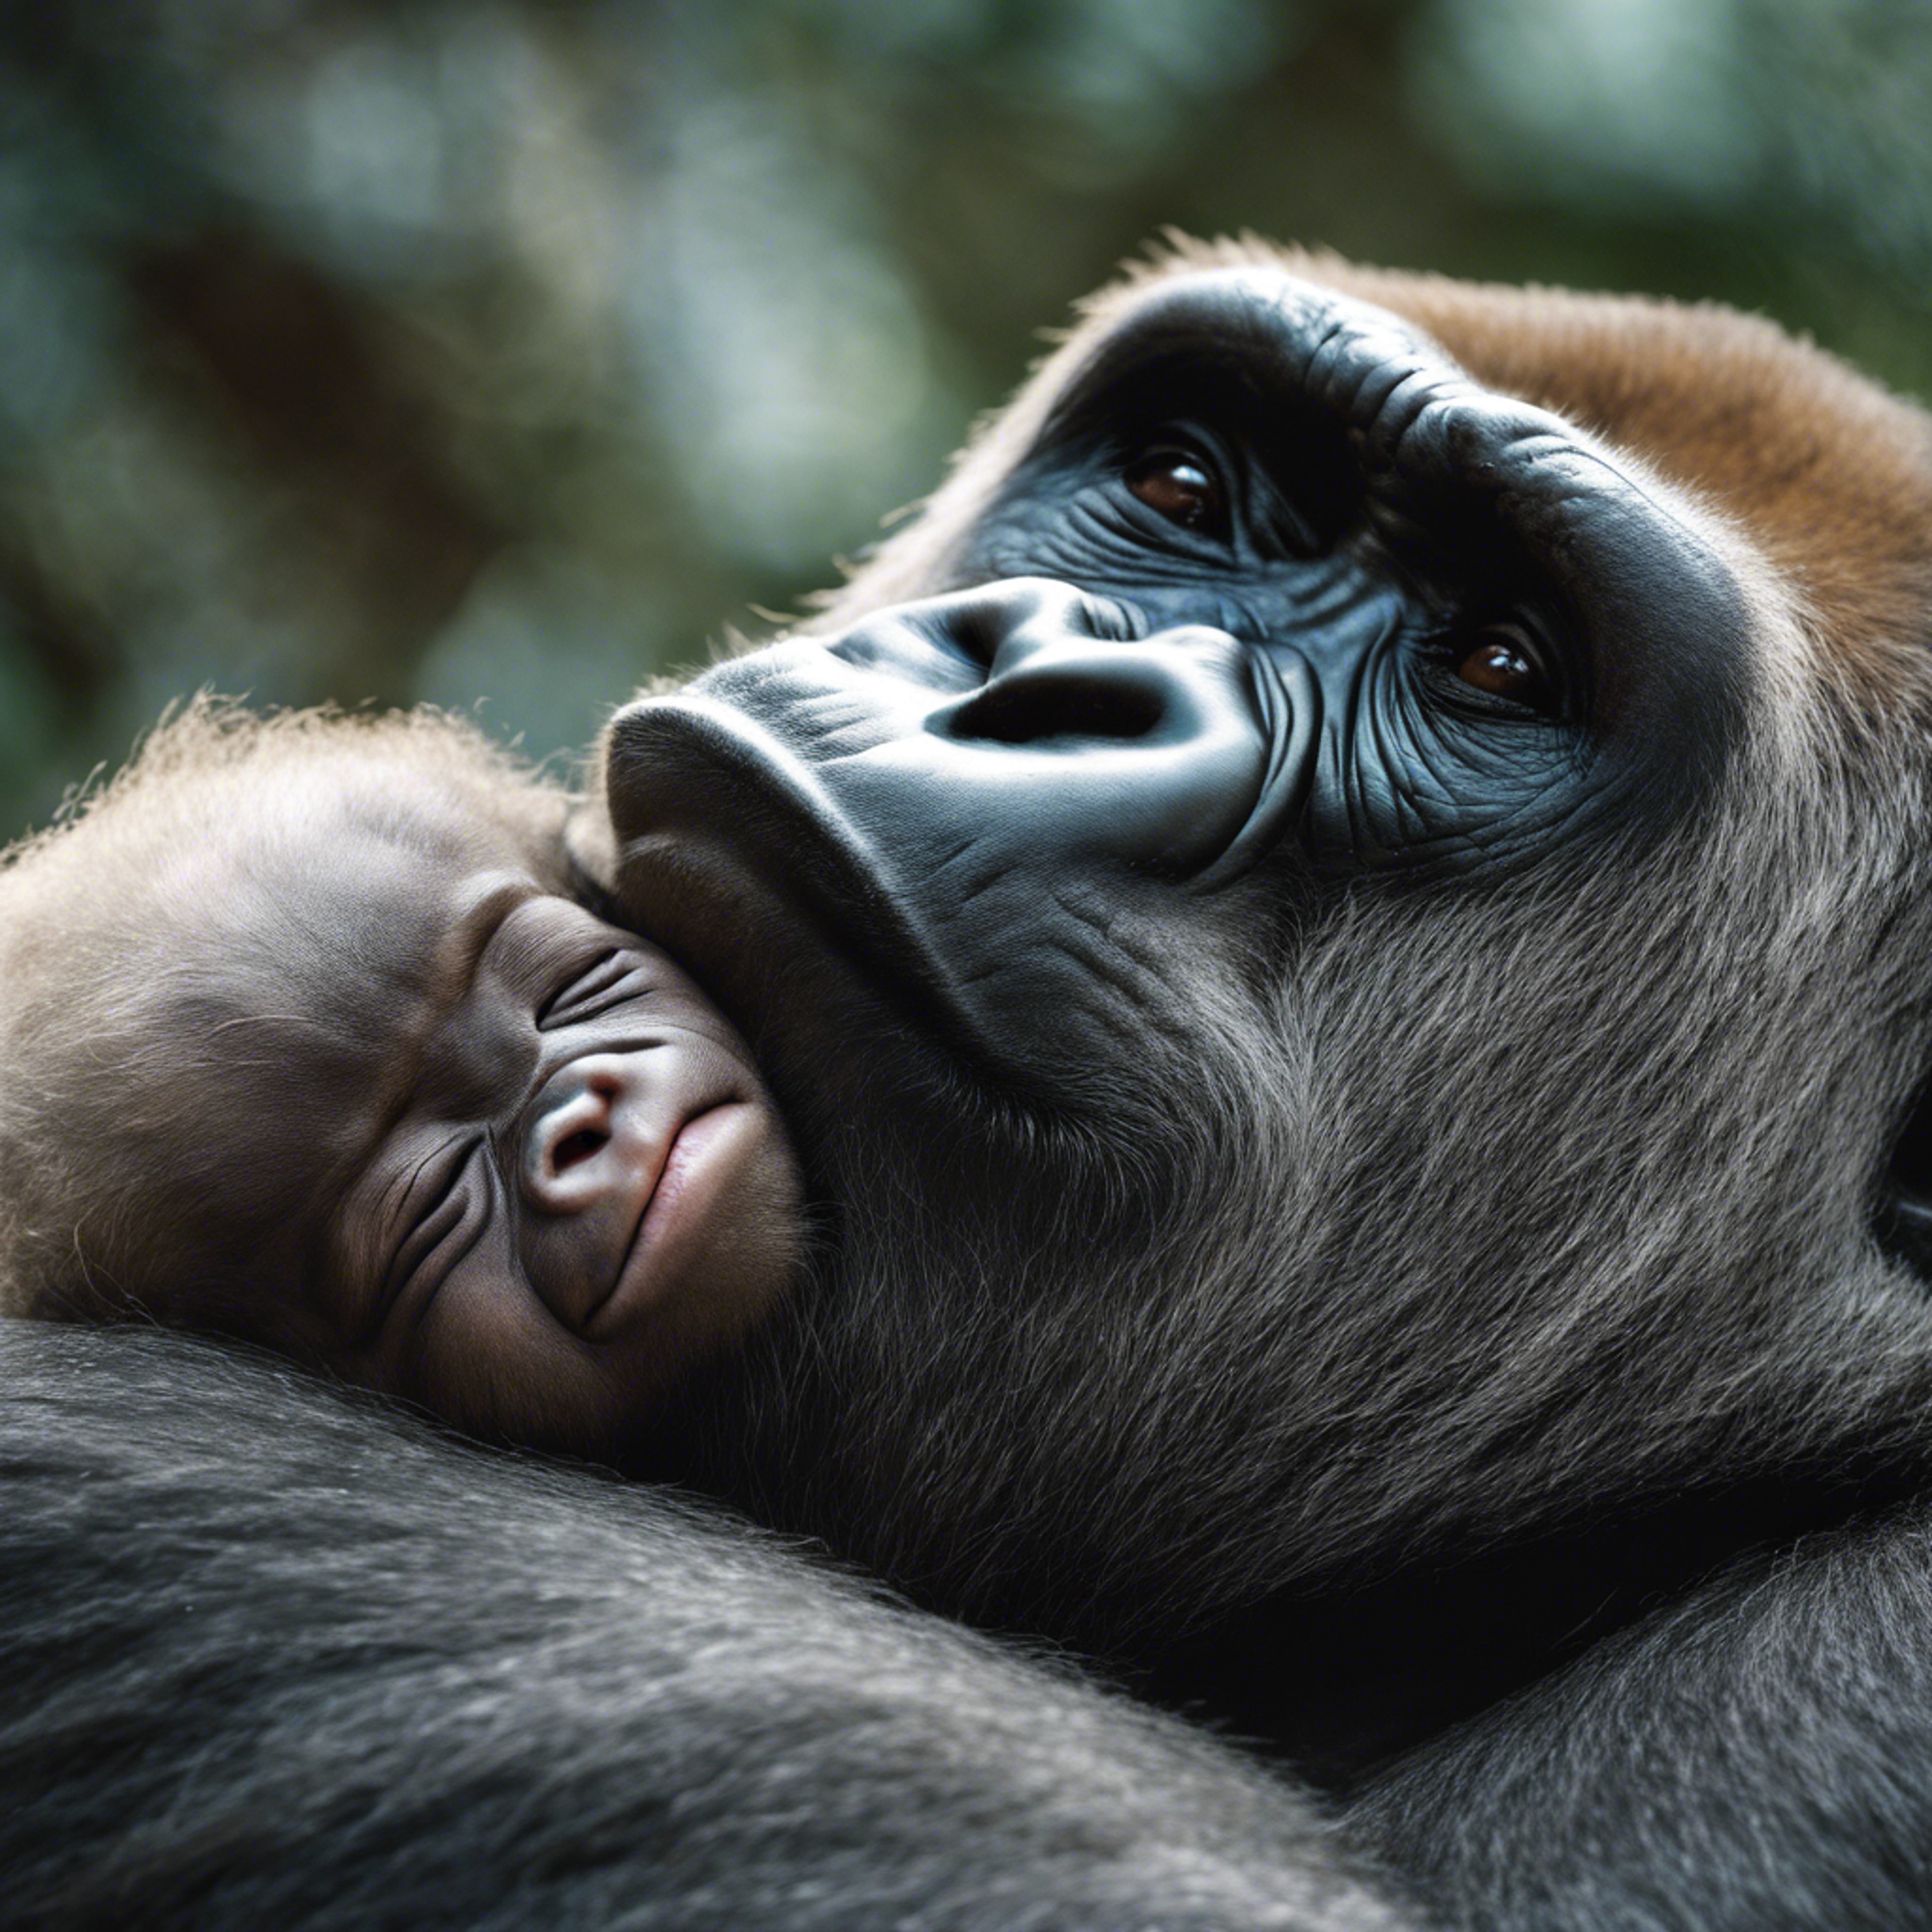 A close-up, emotional study of a gorilla mother's face as she cradles her sleeping newborn. Tapéta[516e0f2ed6254482ad03]